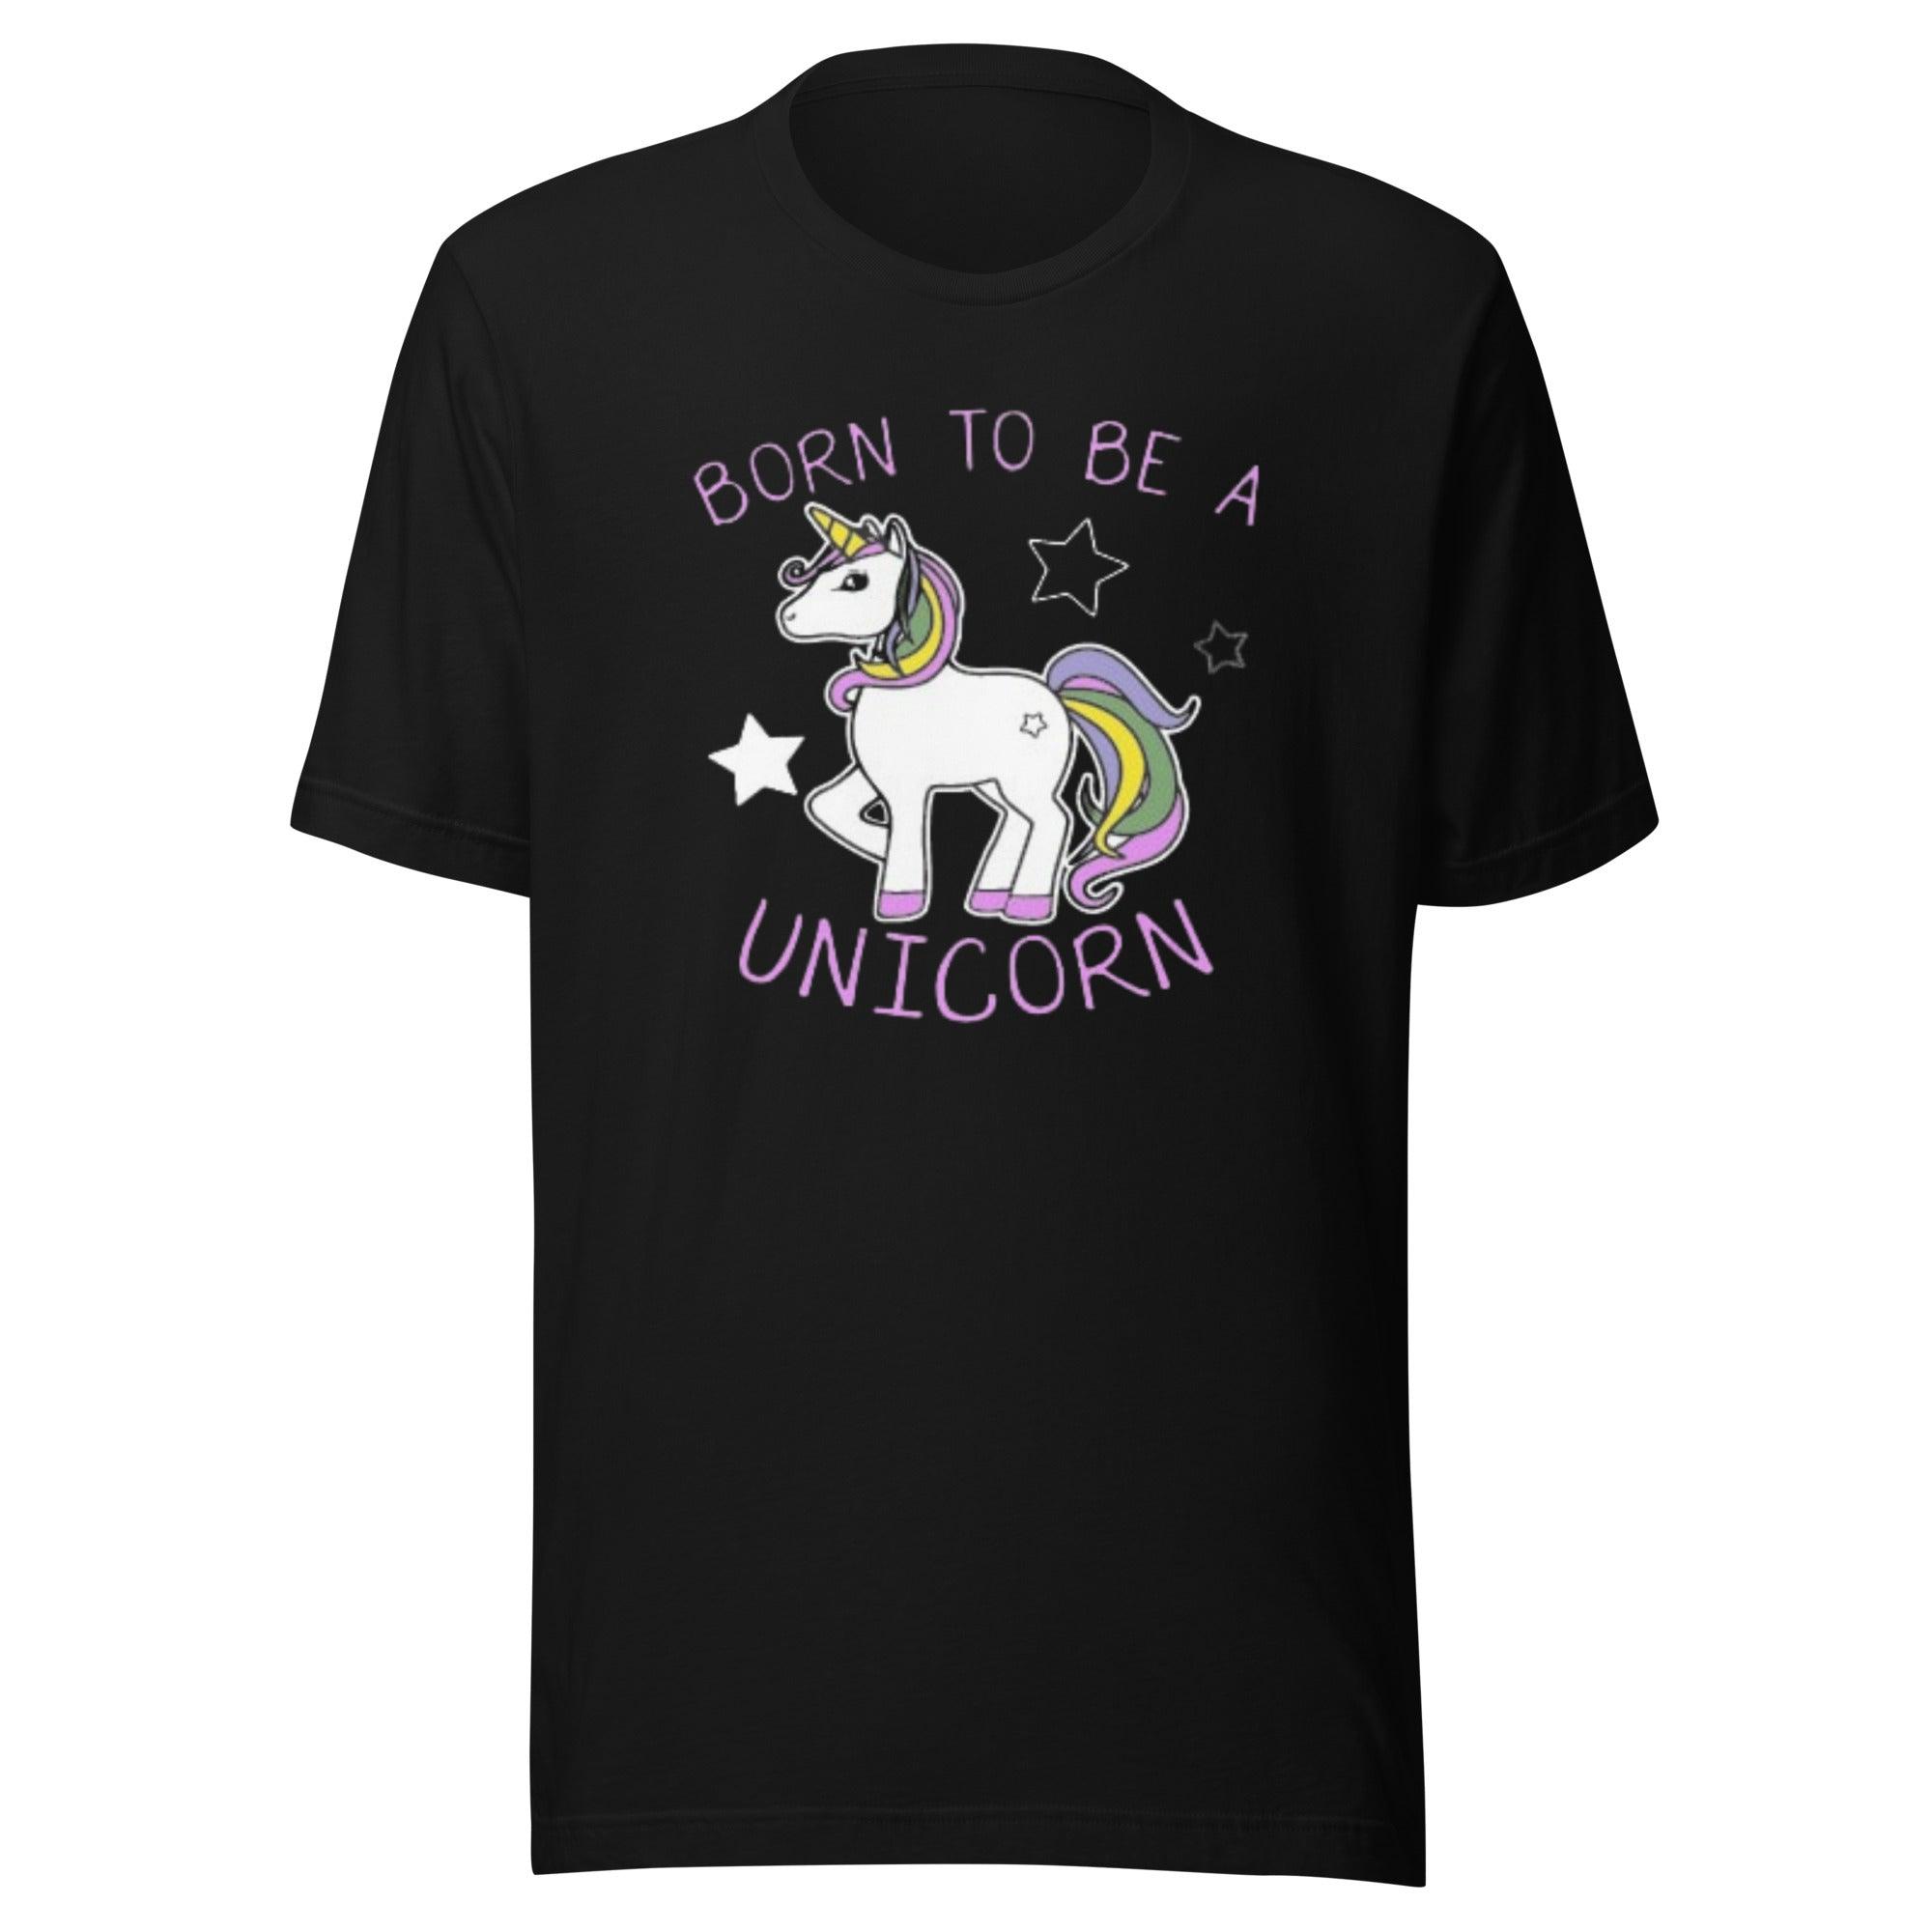 Born To Be A Unicorn T-shirt Short Sleeve Ultra Soft Cotton Crew Neck Top